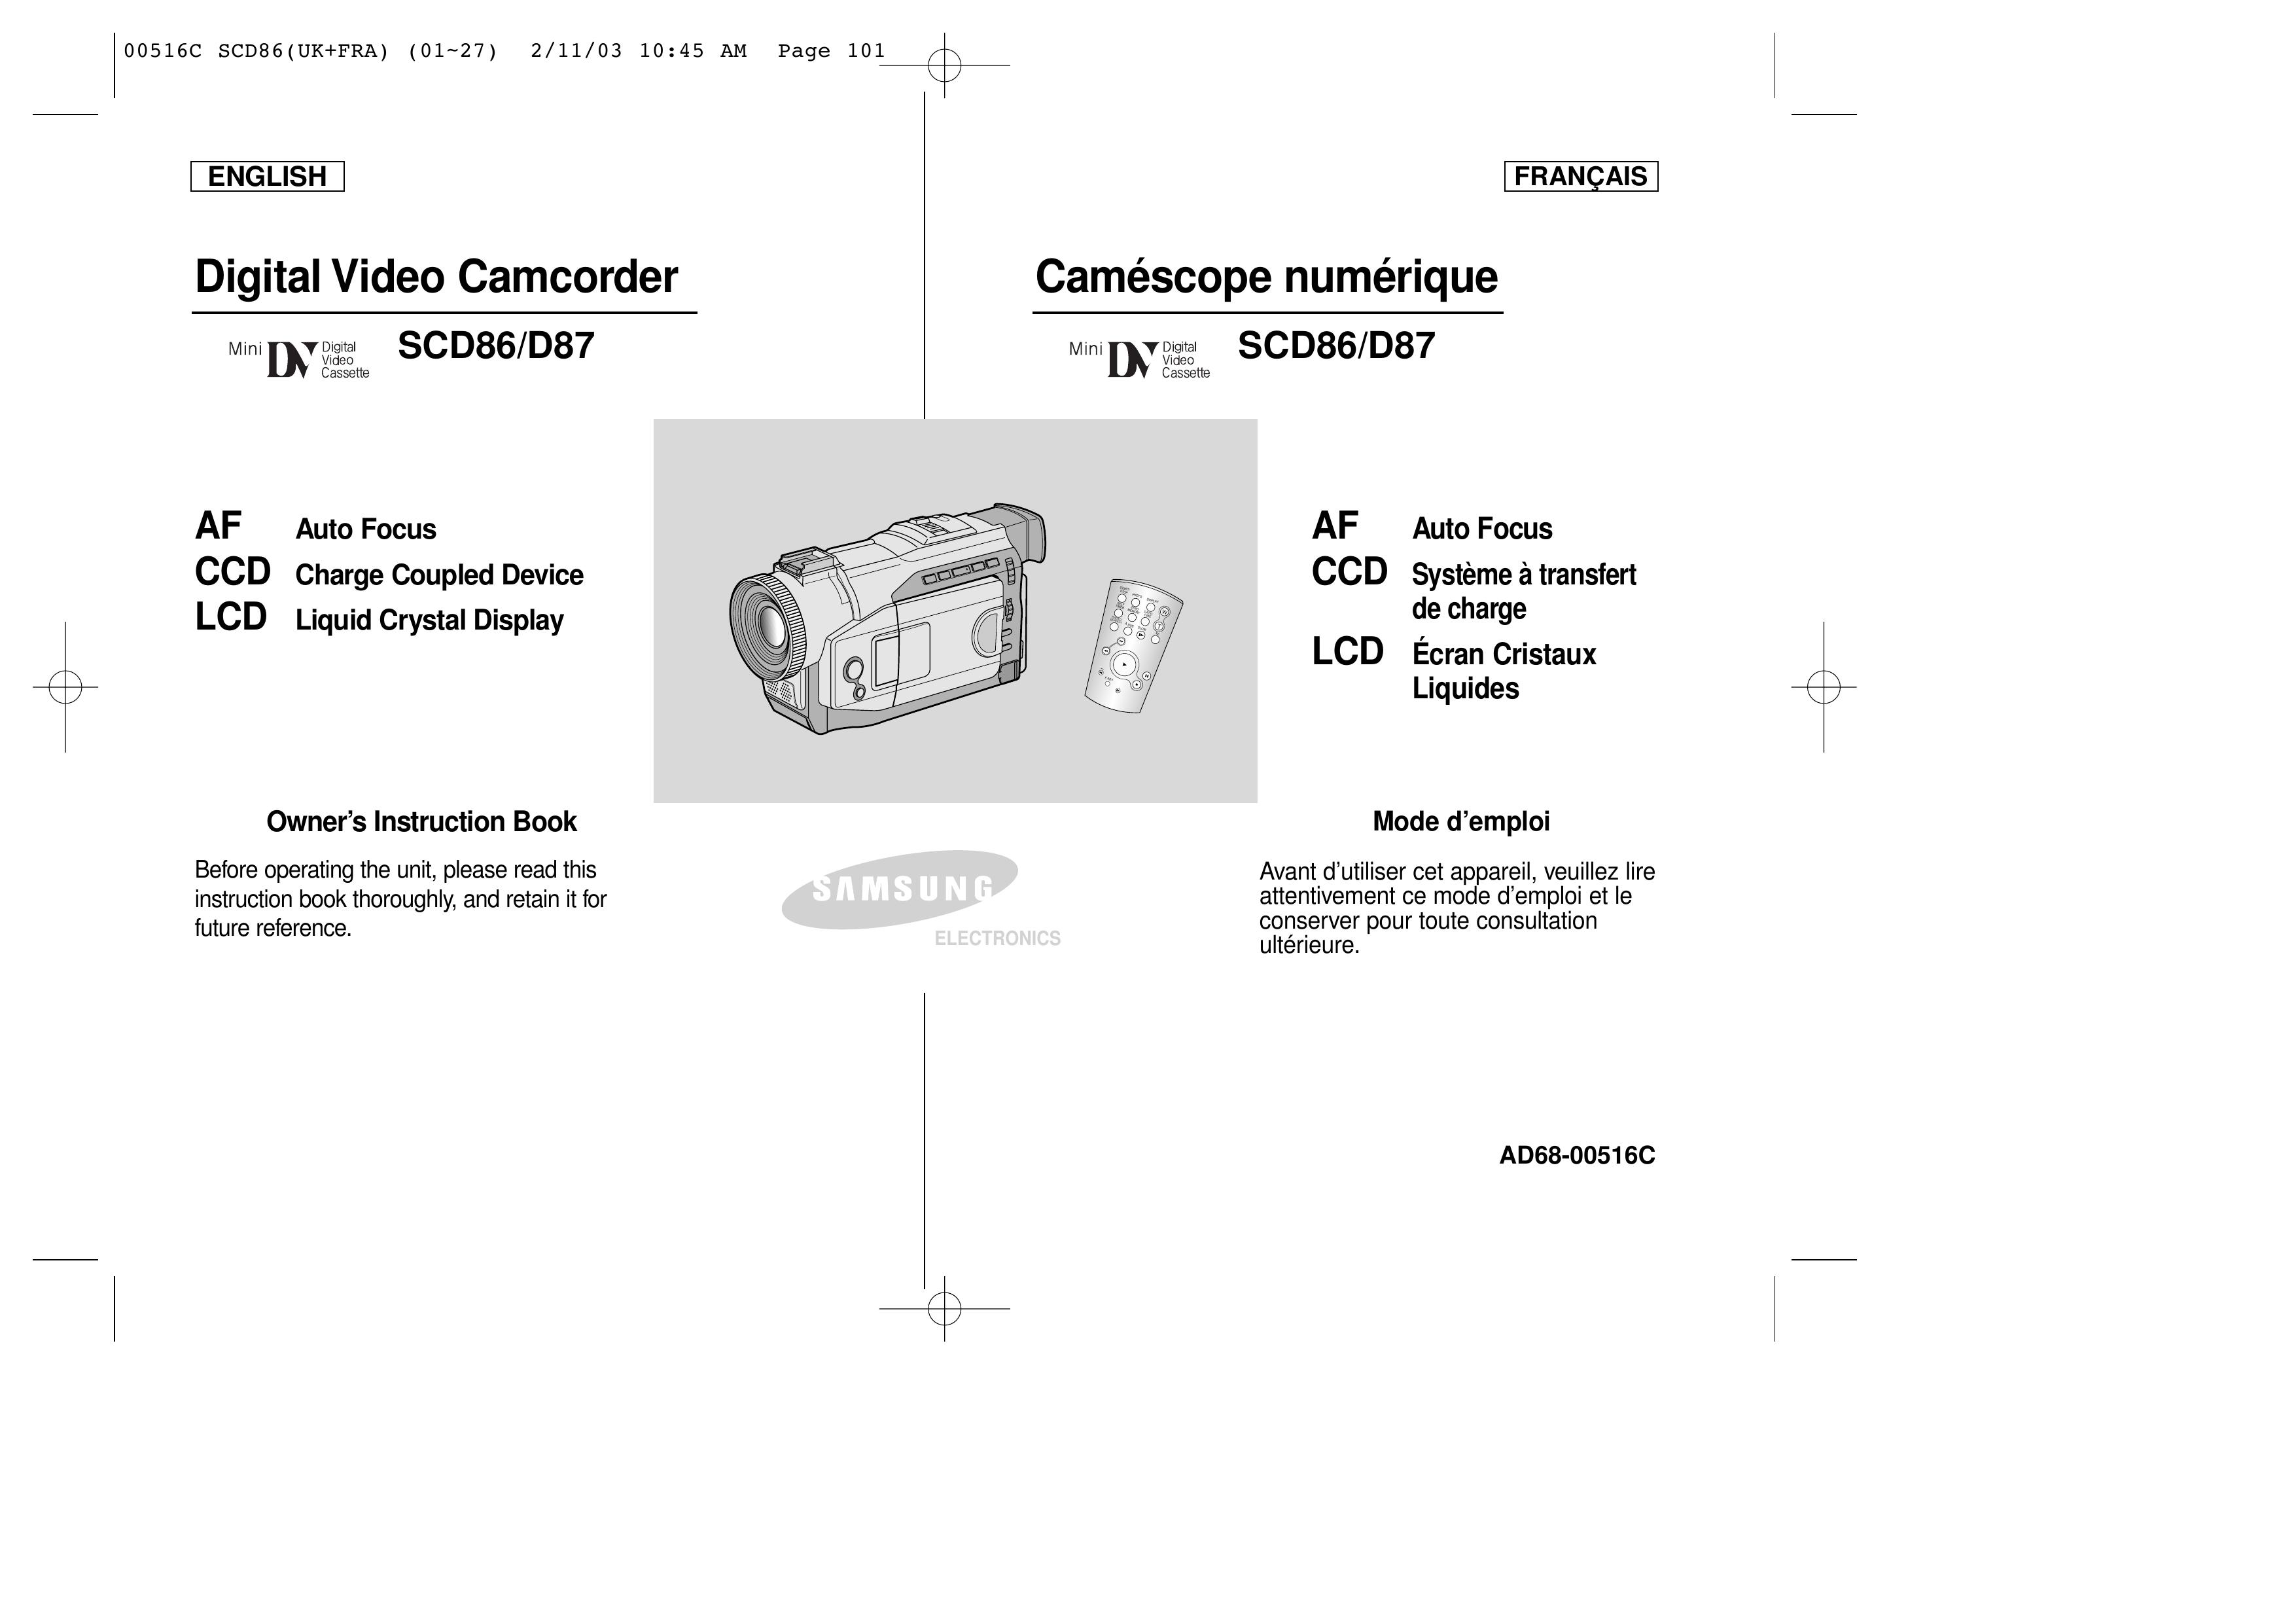 Samsung AD68-00516C Camcorder User Manual